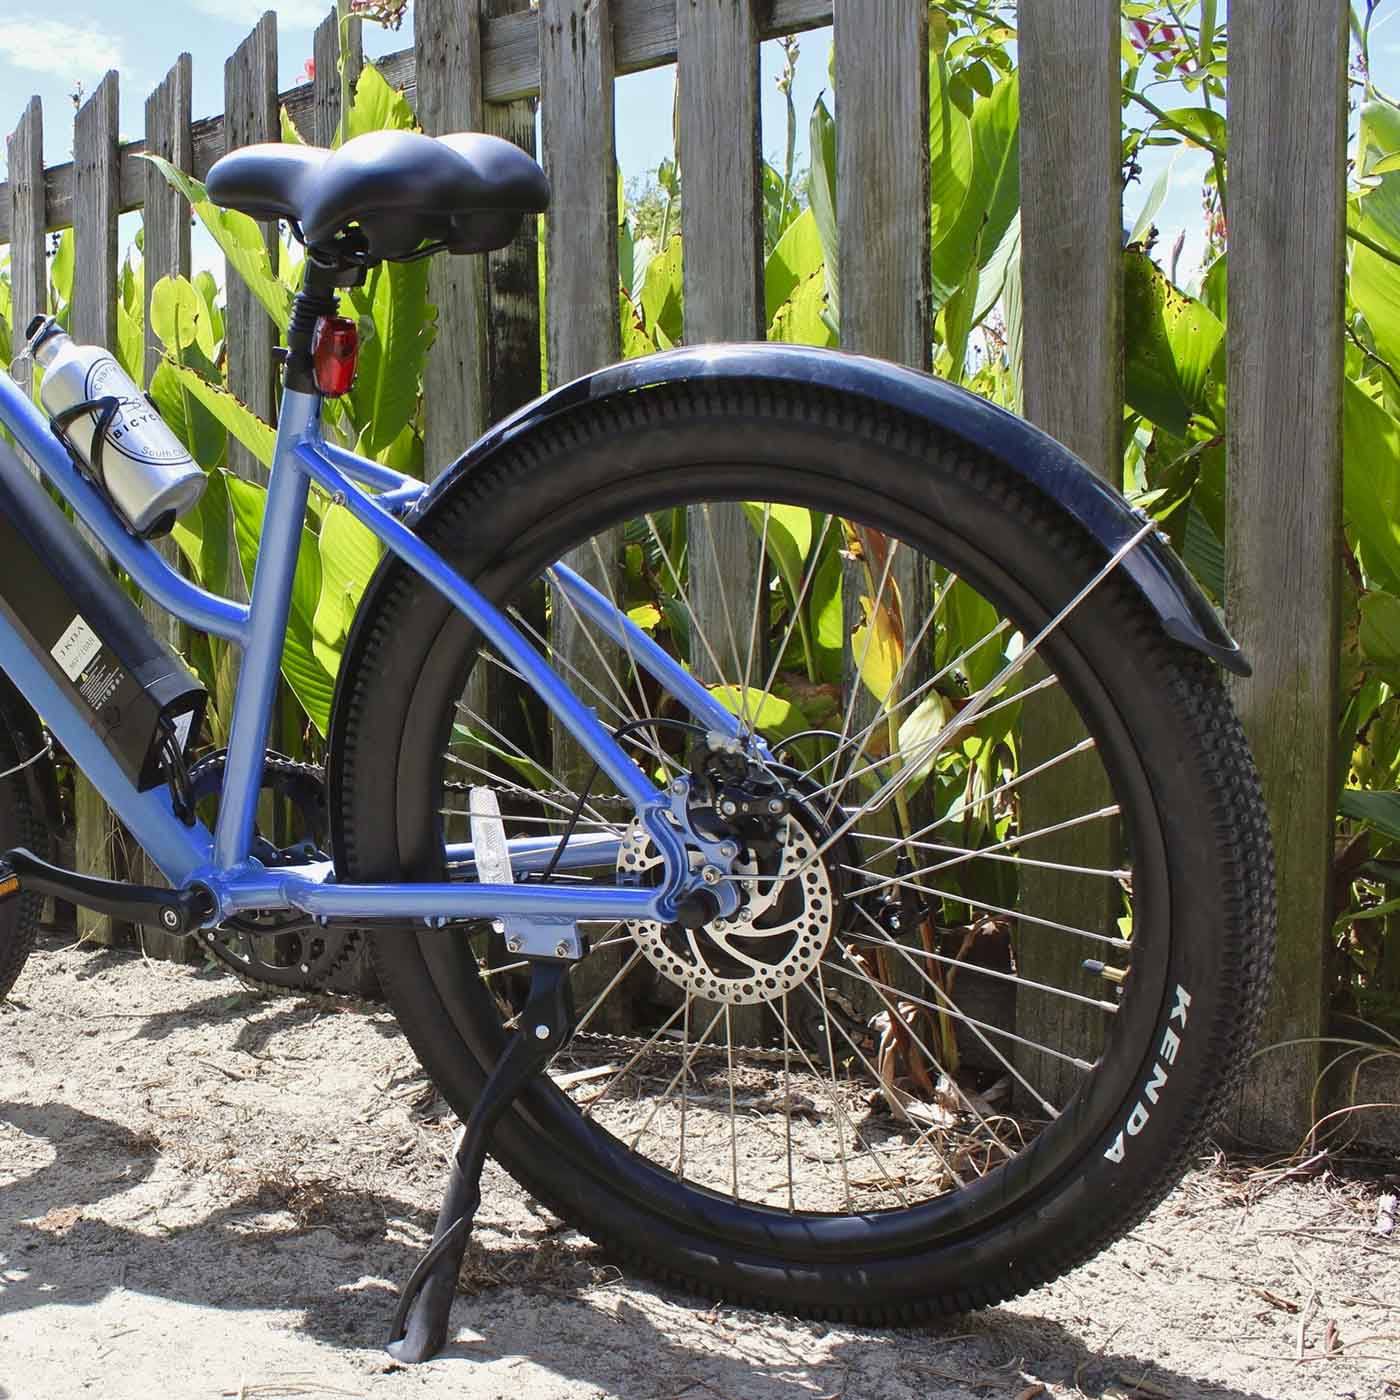 Bintelli B1 Electric Cruiser Bike In color Blue With Classic Styling